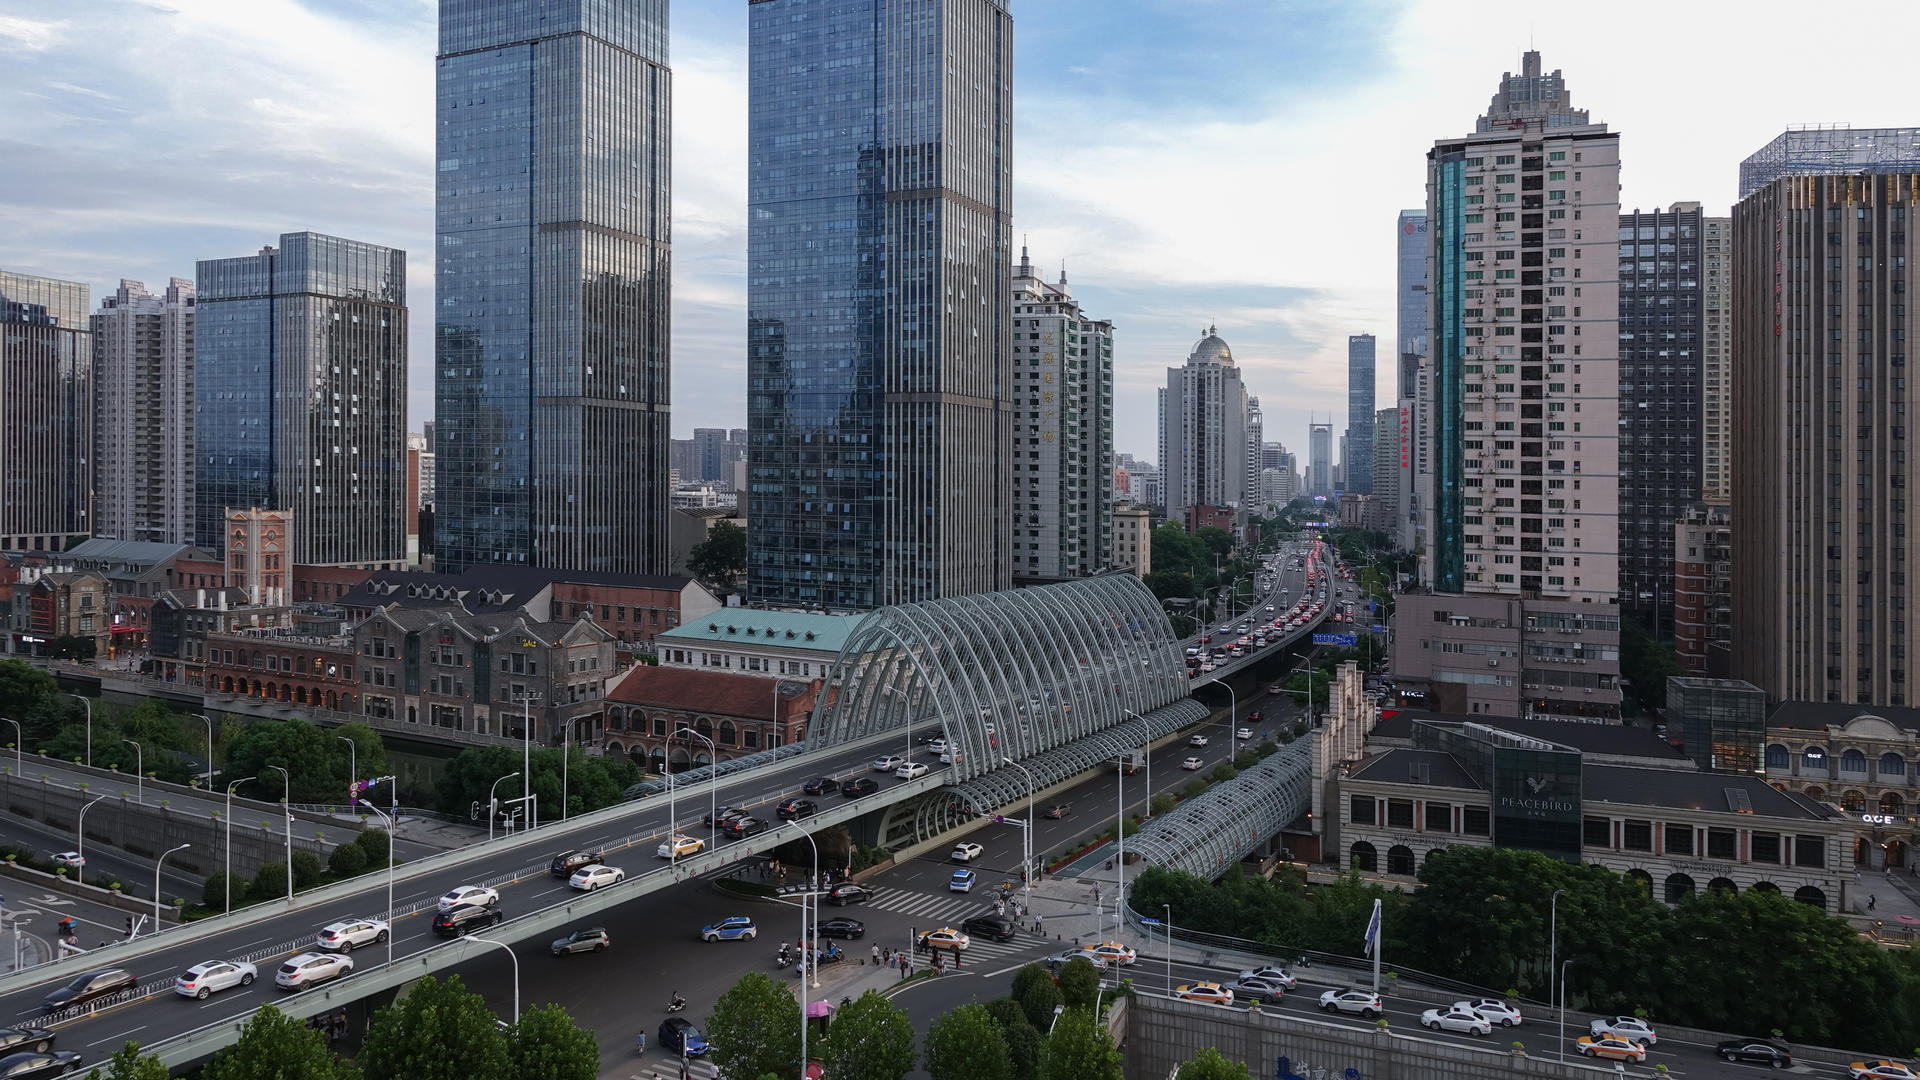 5k素材延时摄影城市金融街立体交通道路车流视频的预览图